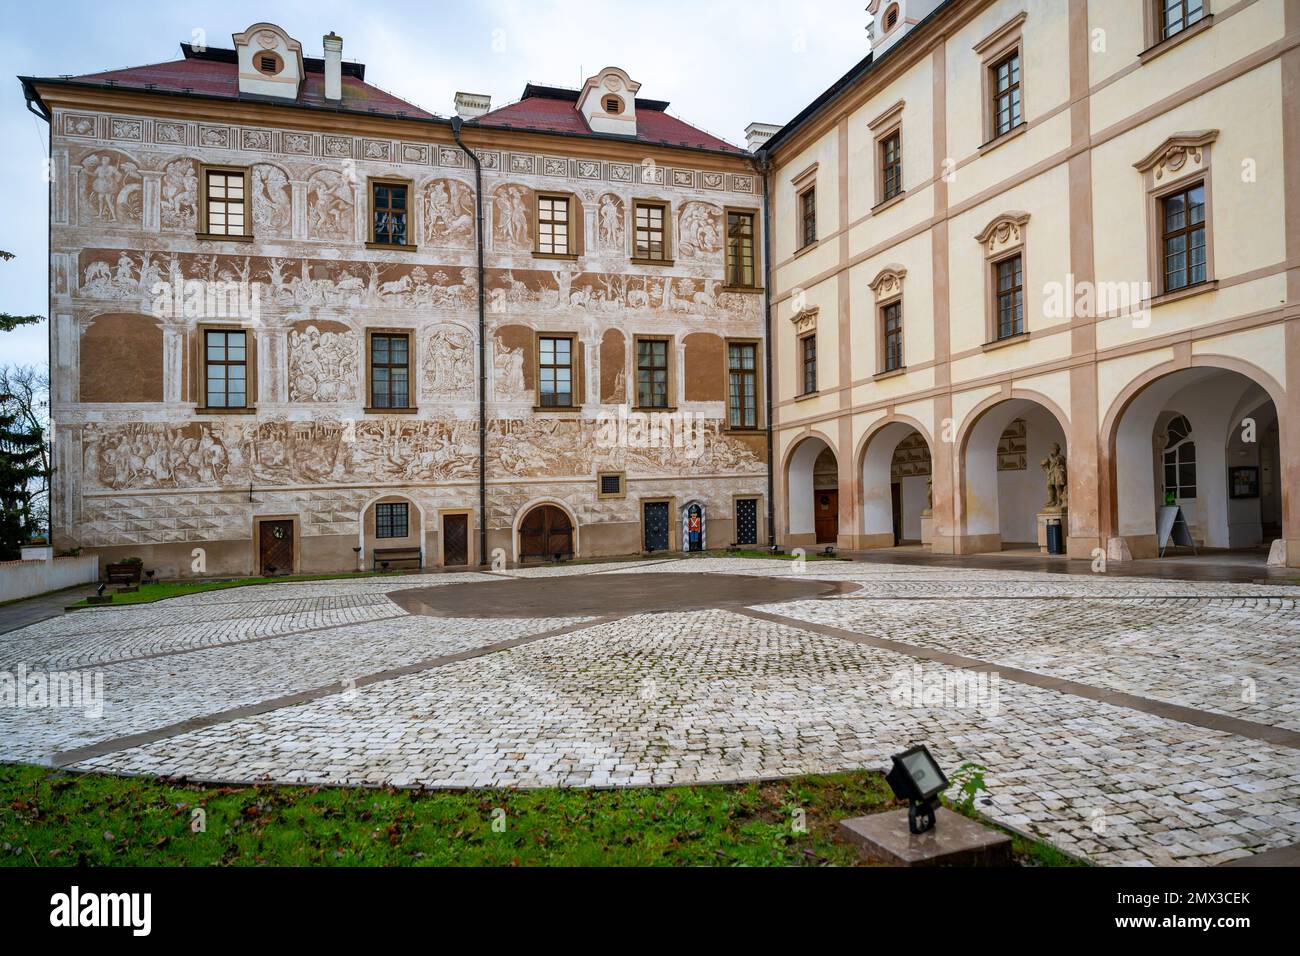 Castle Benatky nad Jizerou, painted sgraffito on building, courtyard. Czech republic. Stock Photo